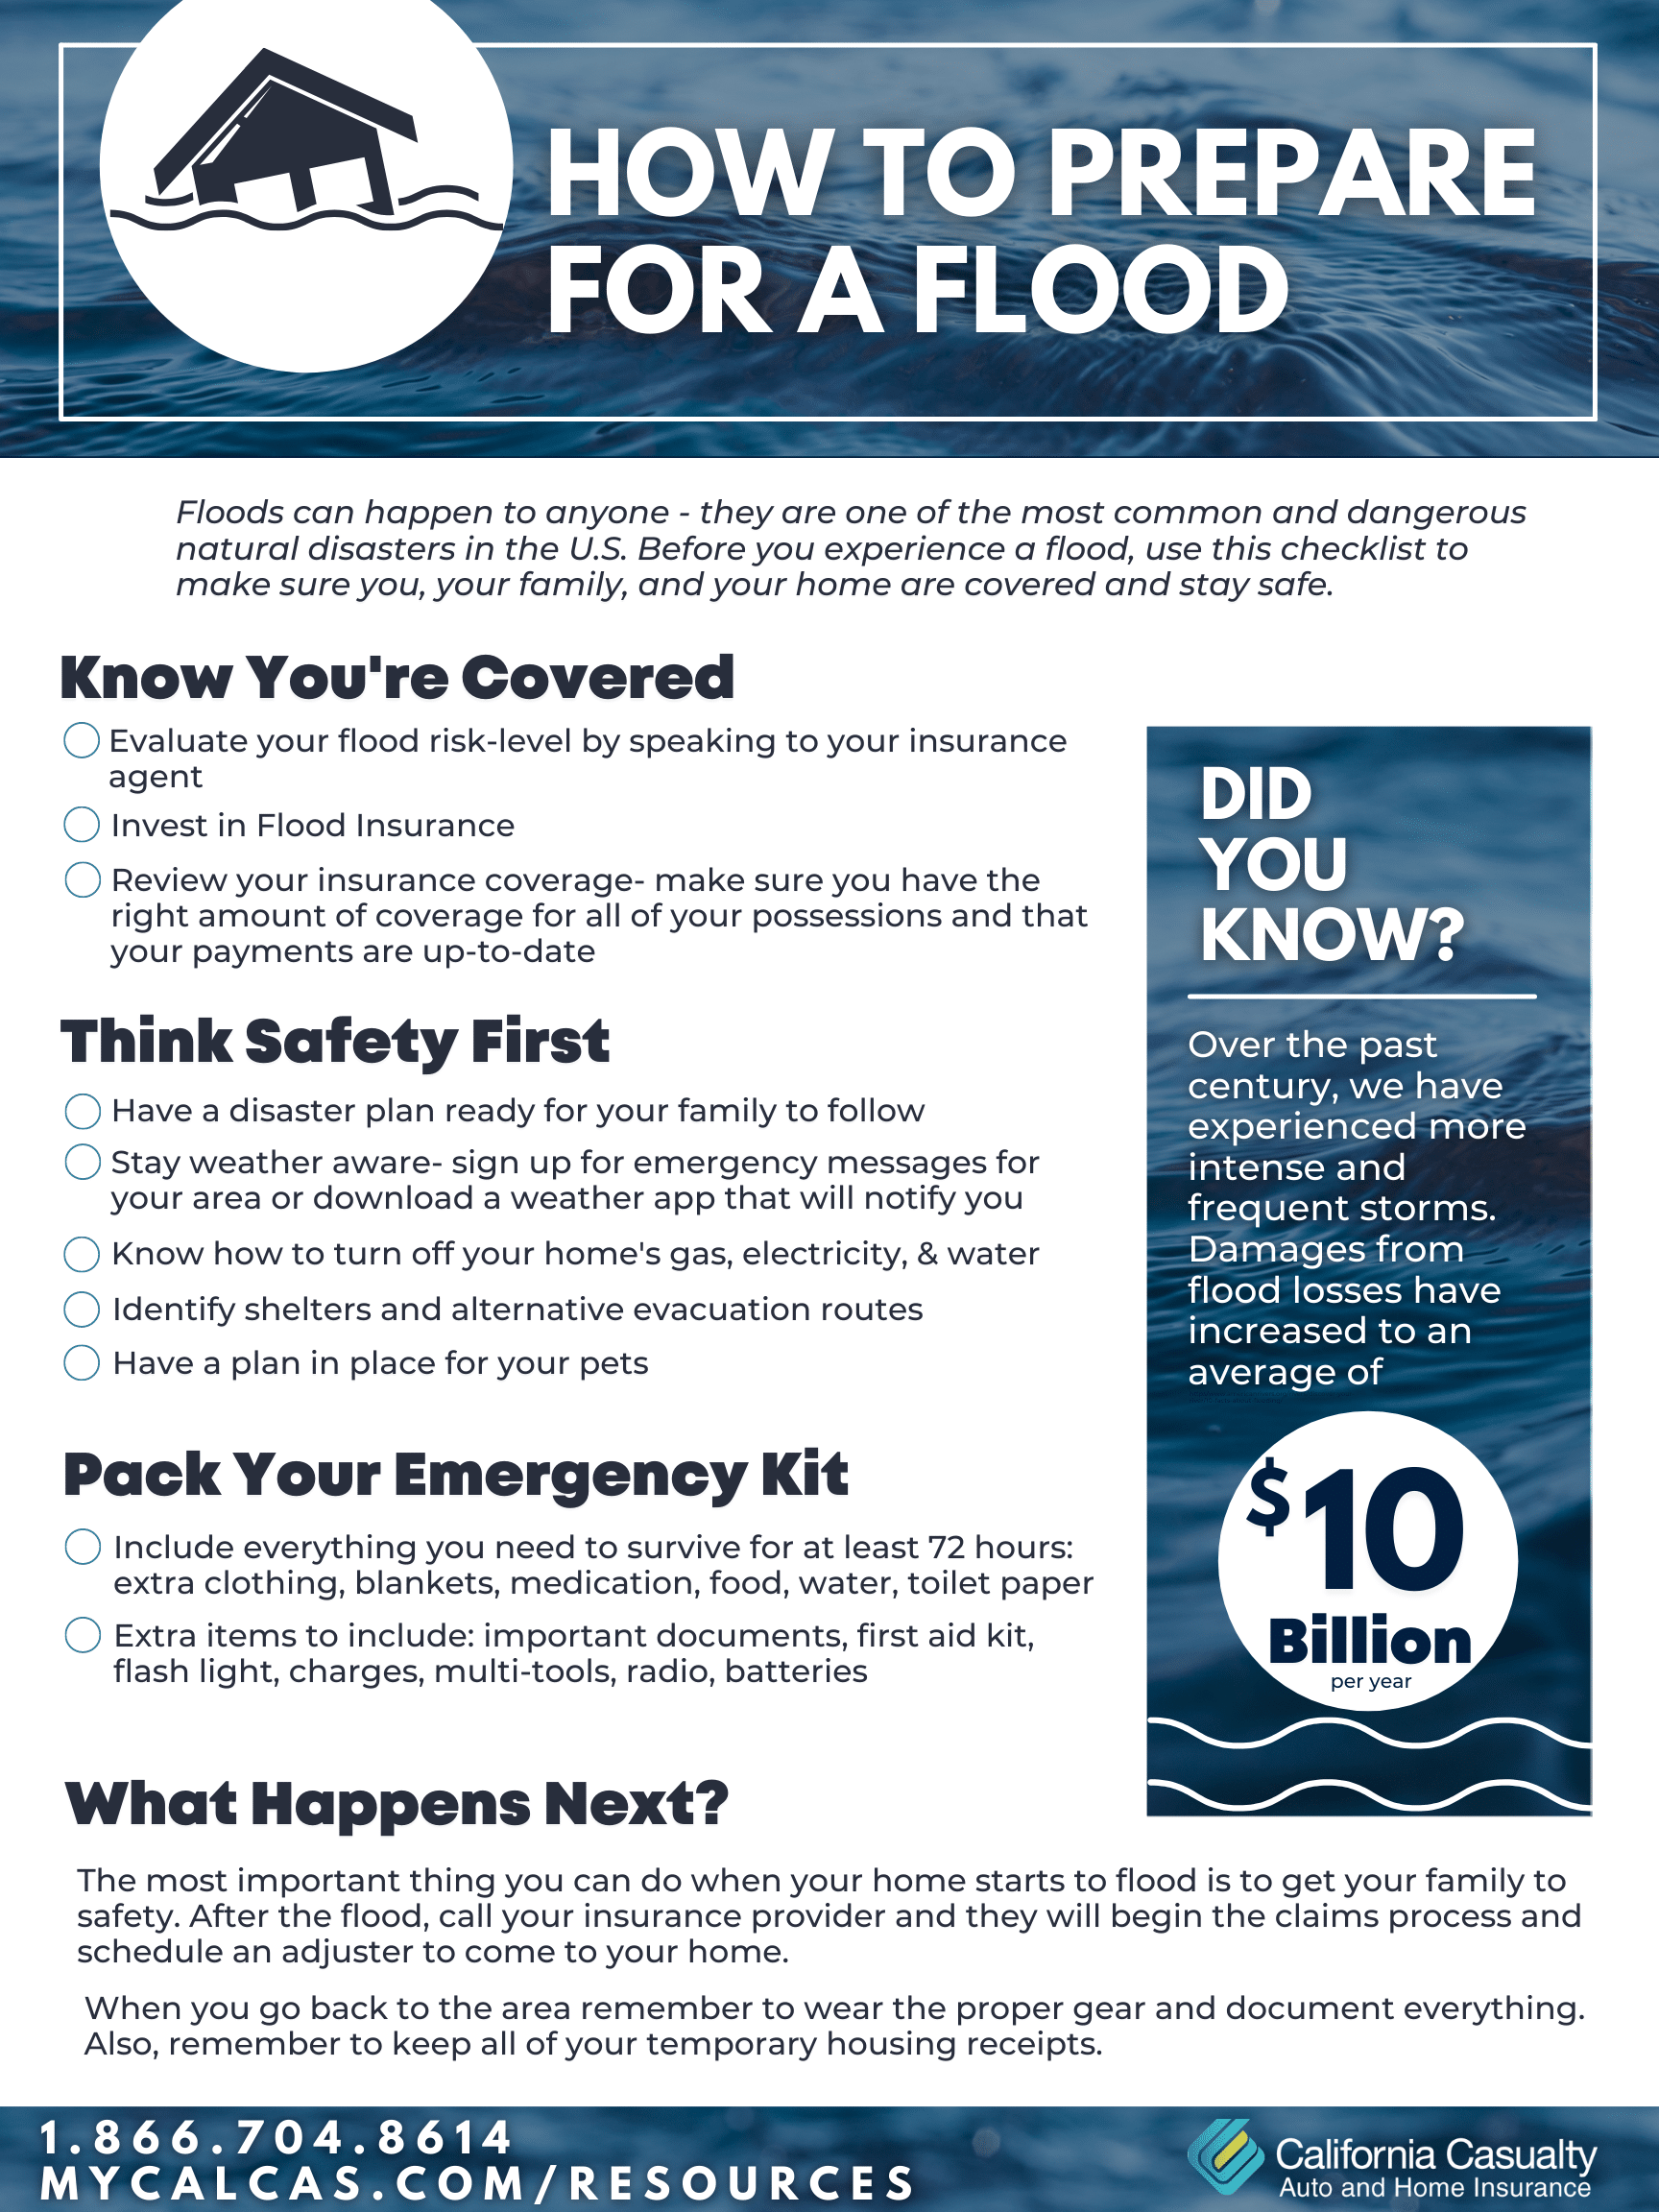 Flood preparedness